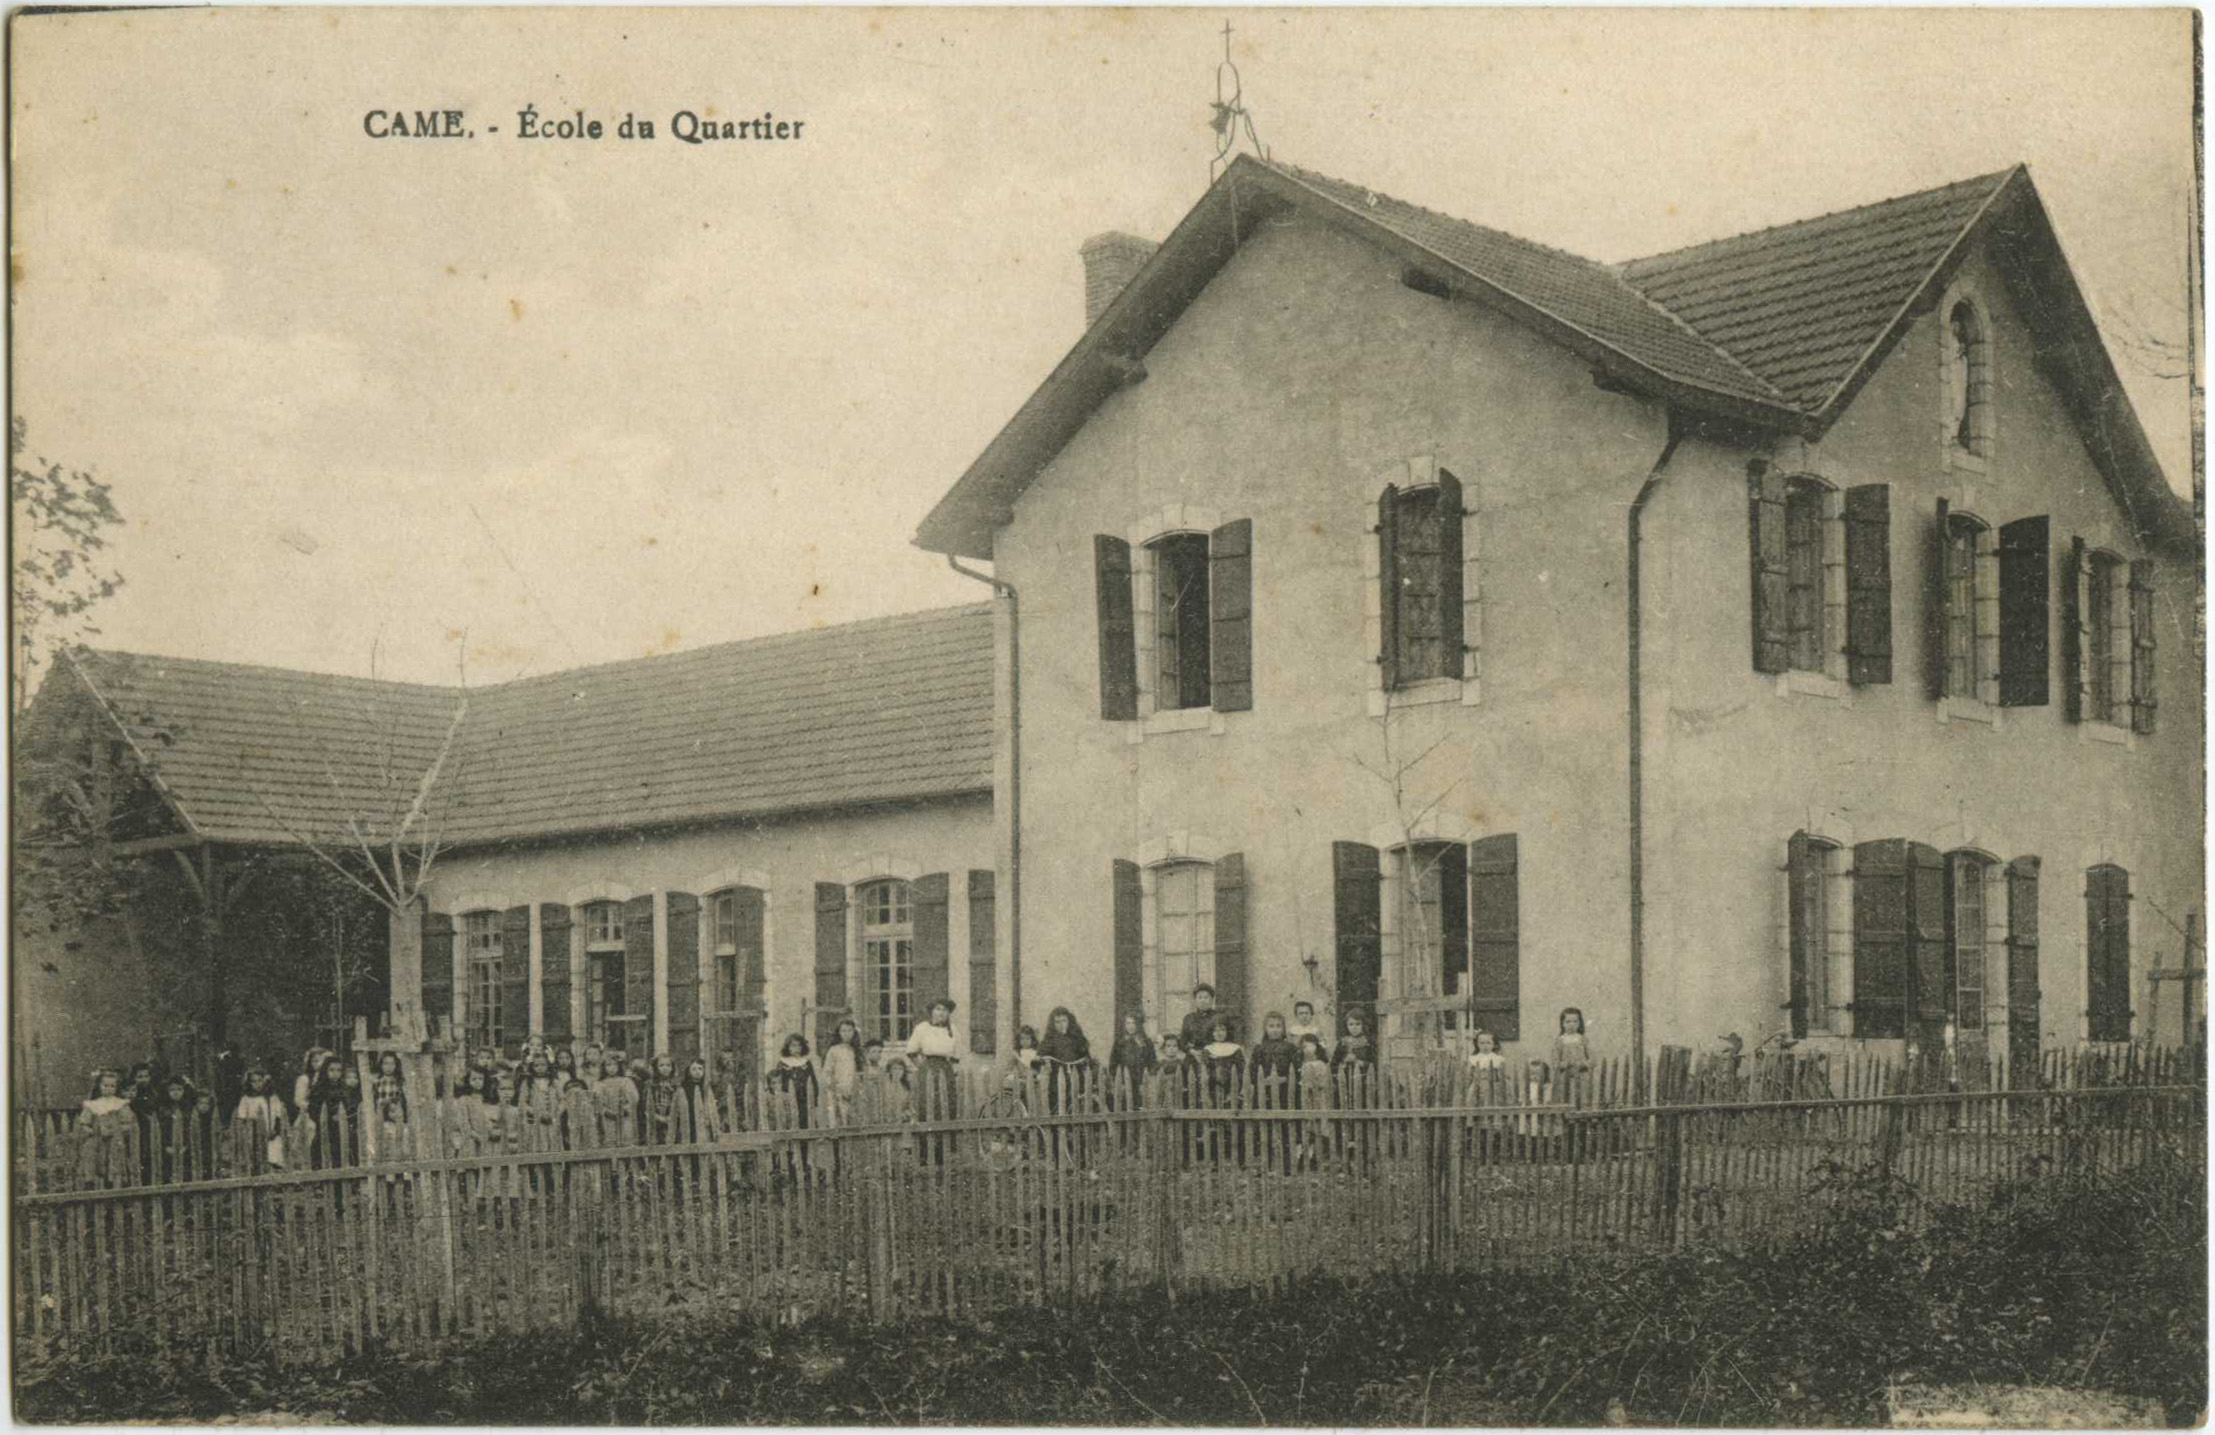 Came - École du Quartier